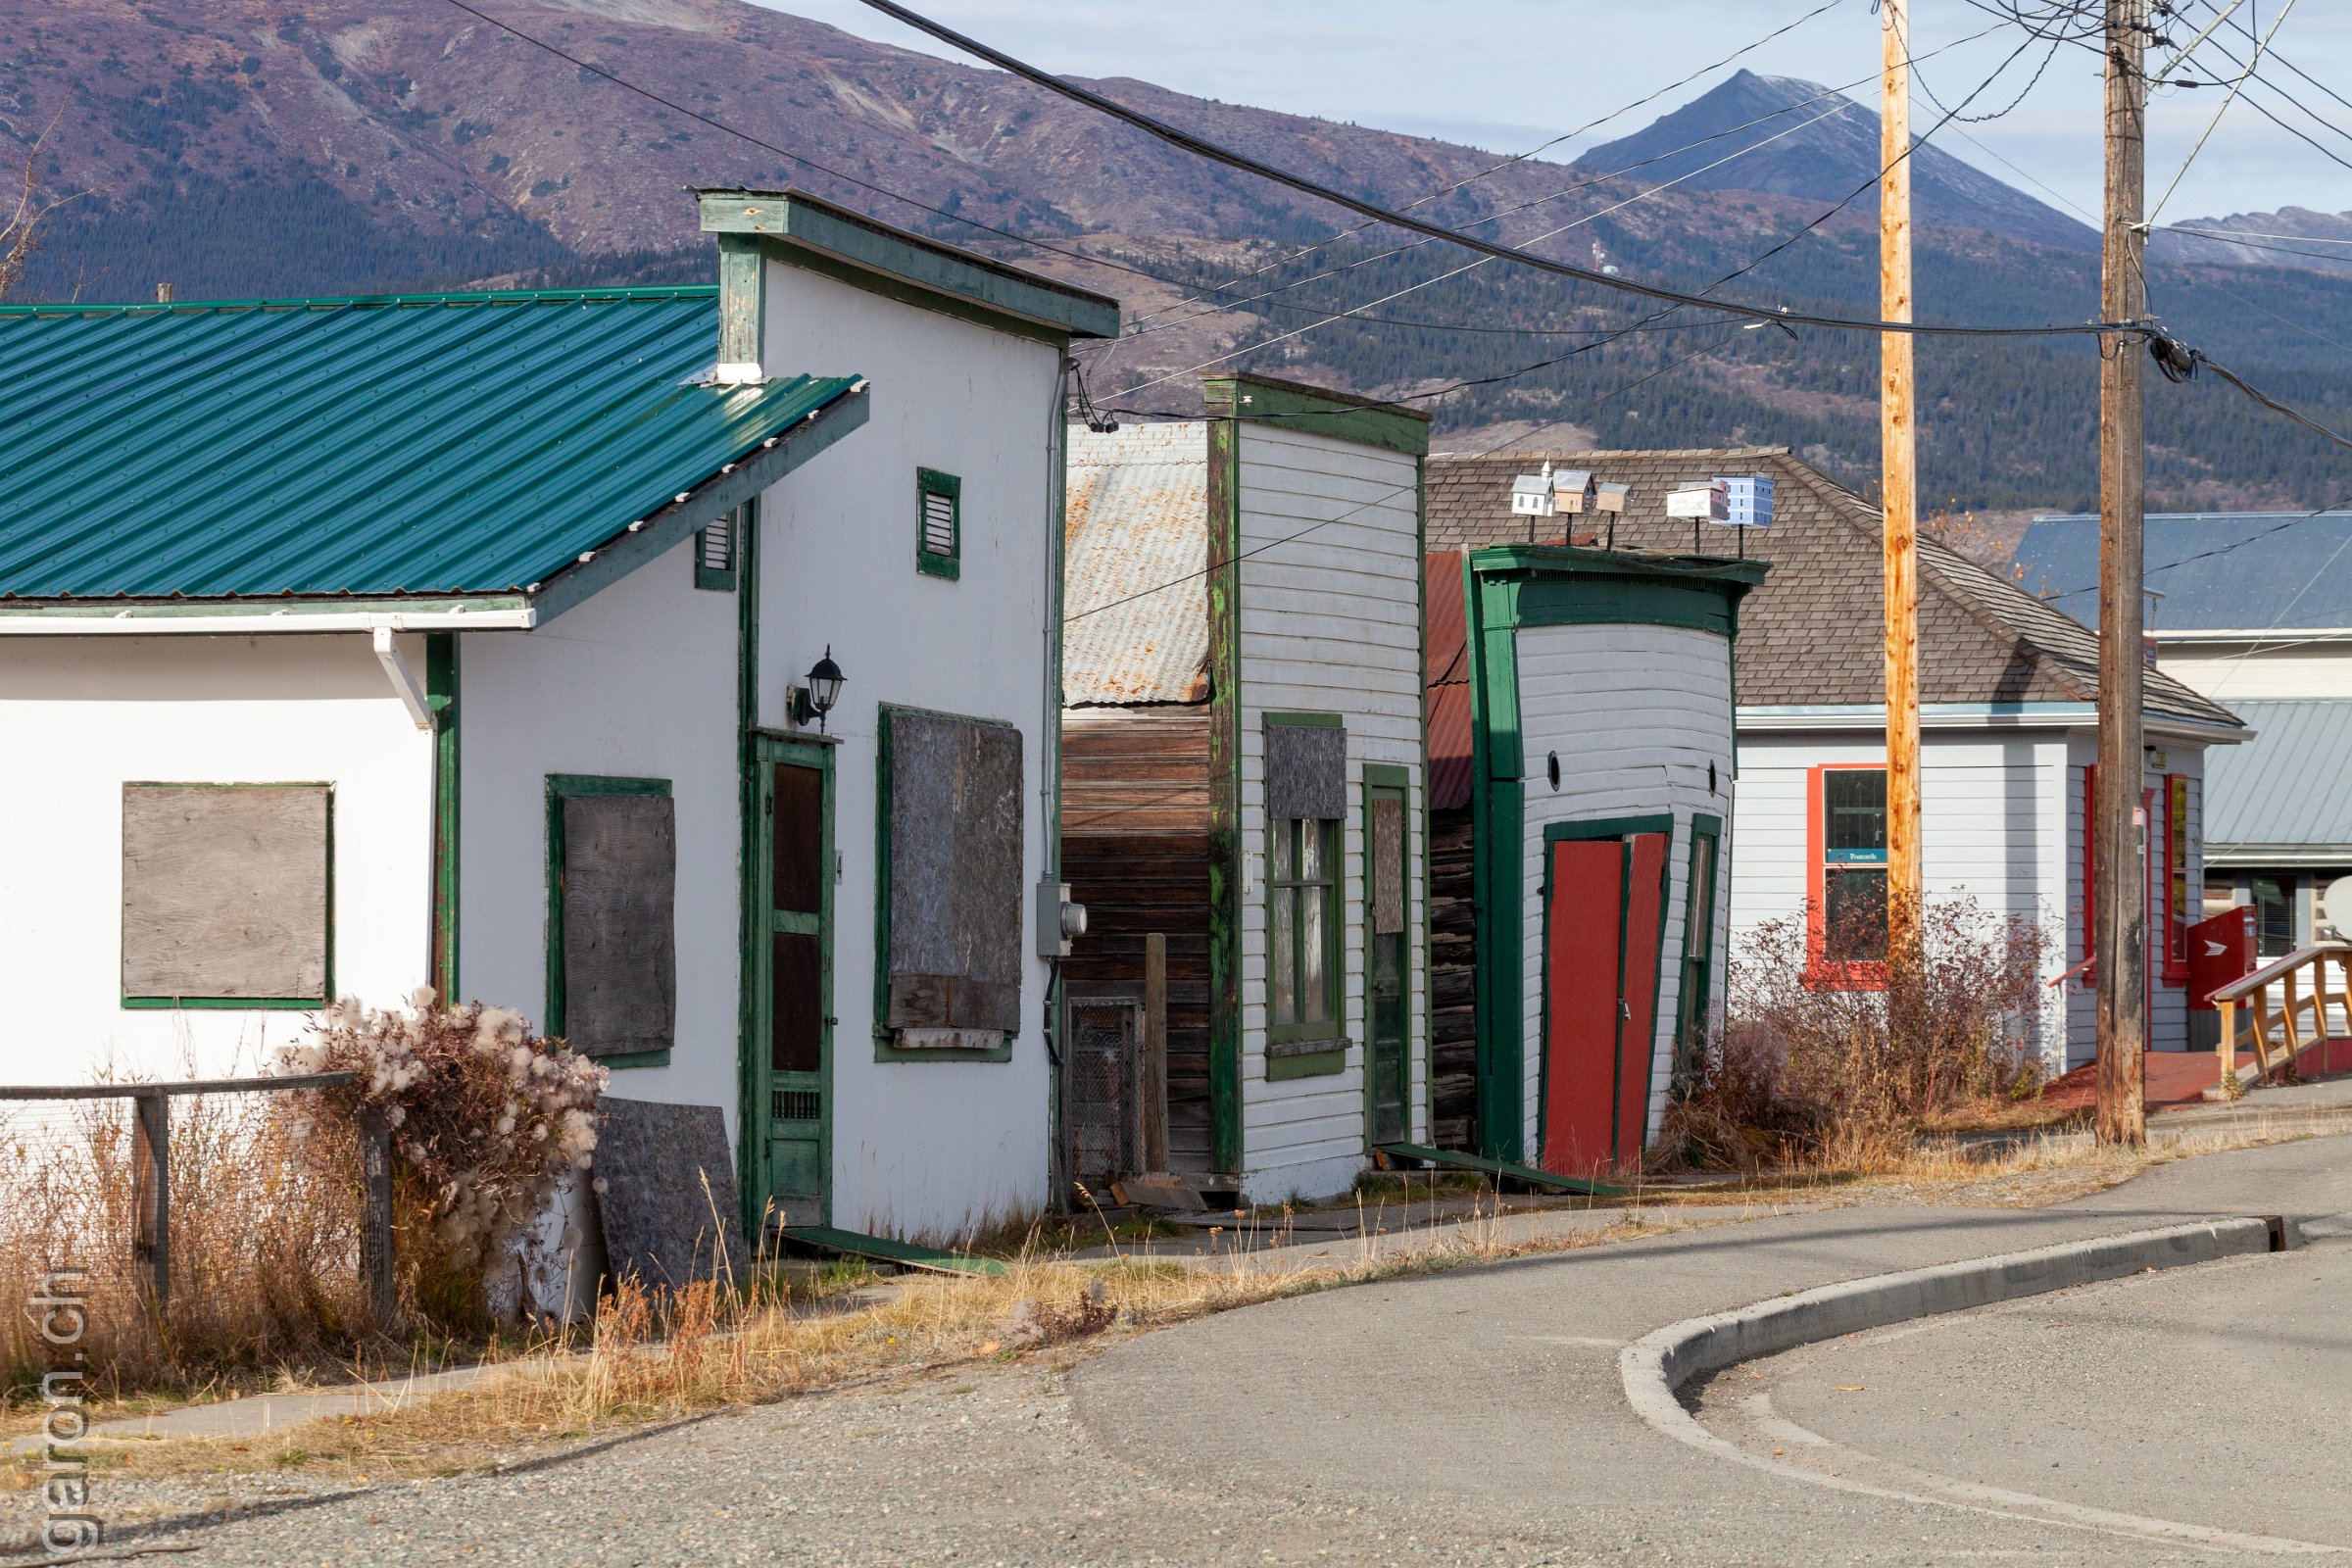 Yukon, Carcross and the tiny houses 